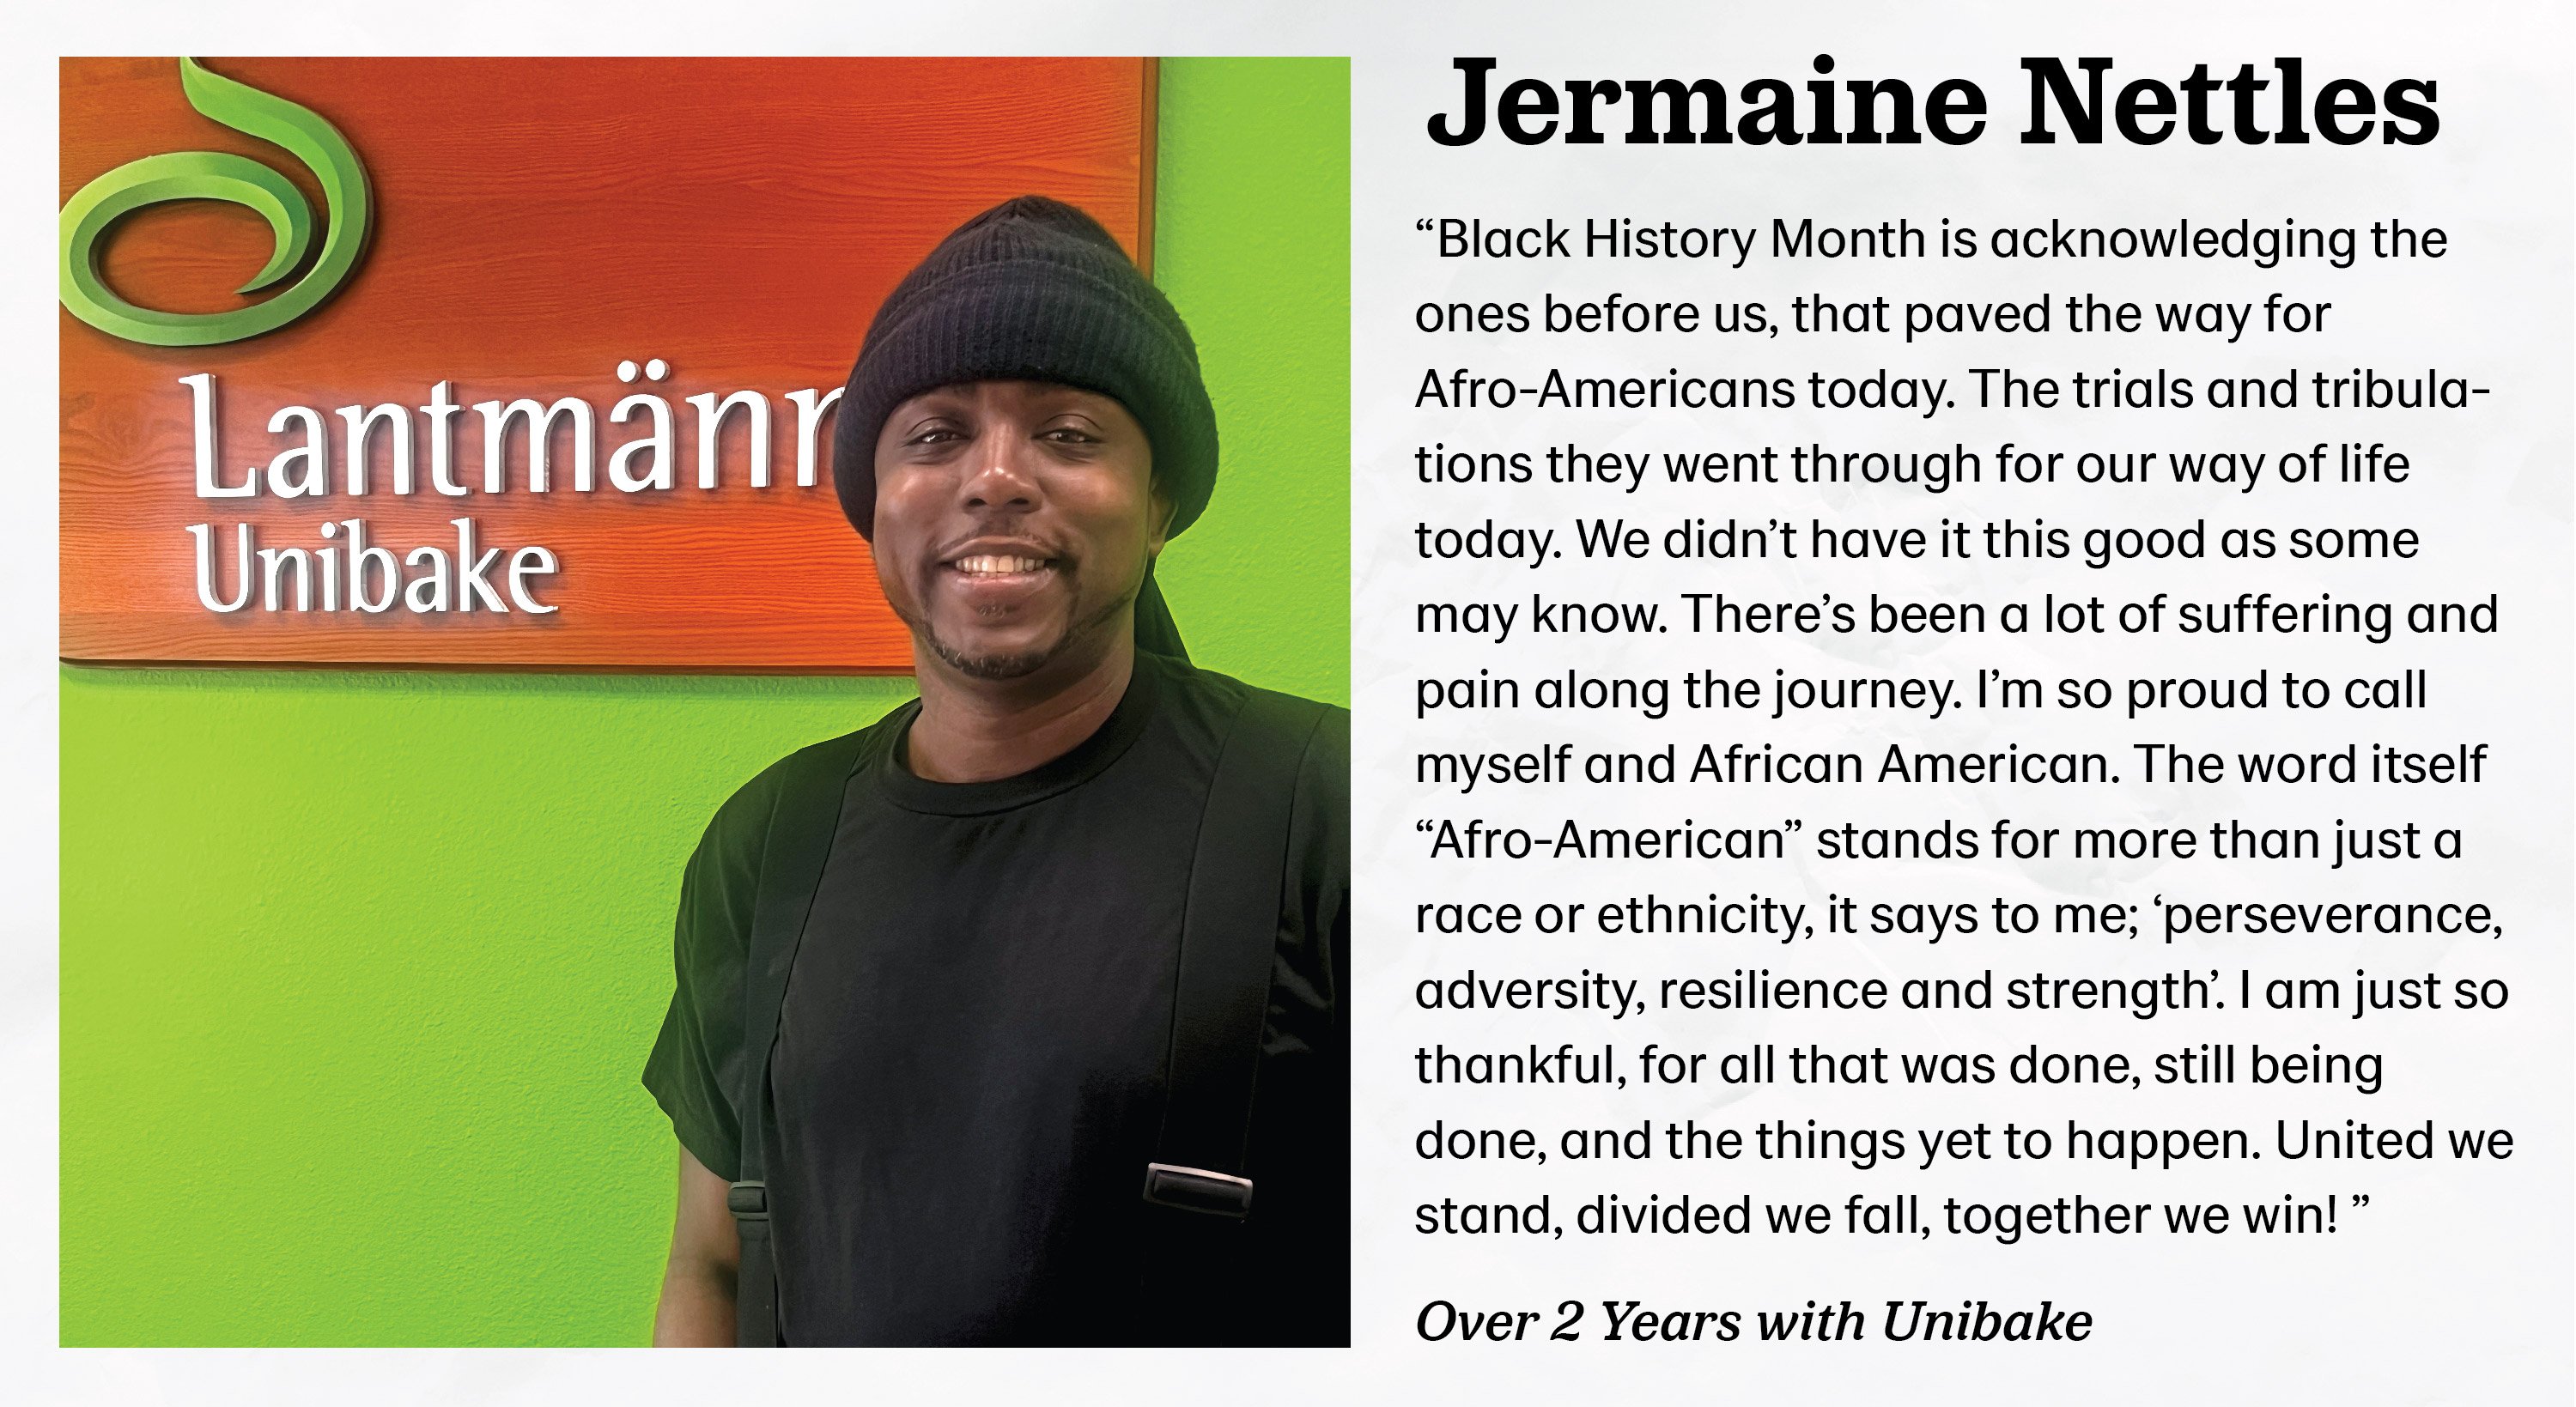 Black History Month Employee Spotlights